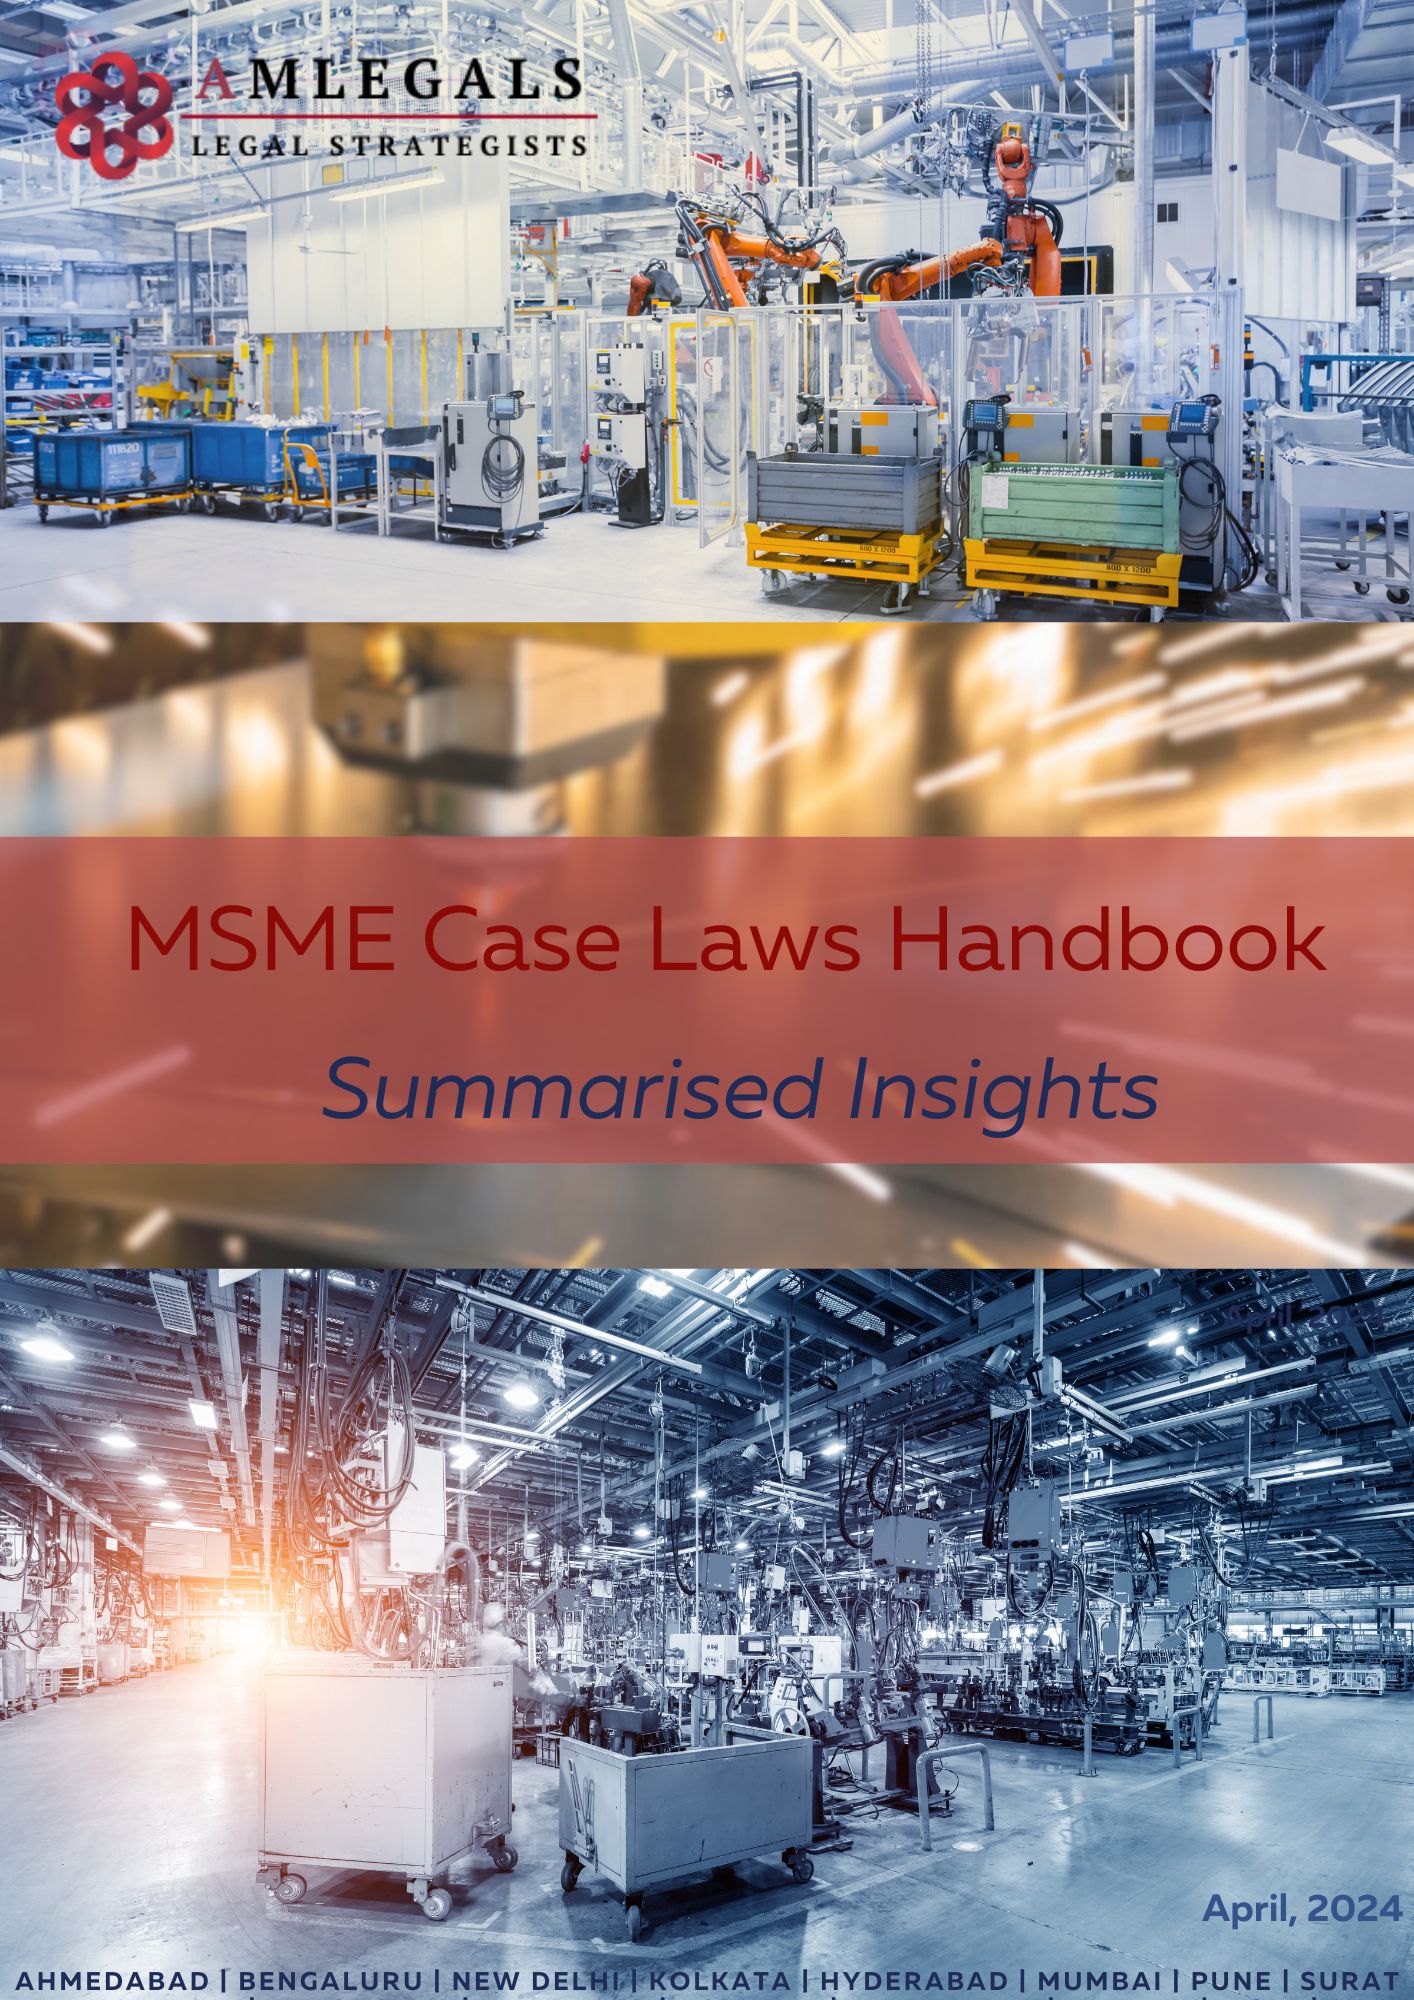 MSME Case Laws Handbook - Summarised Insights